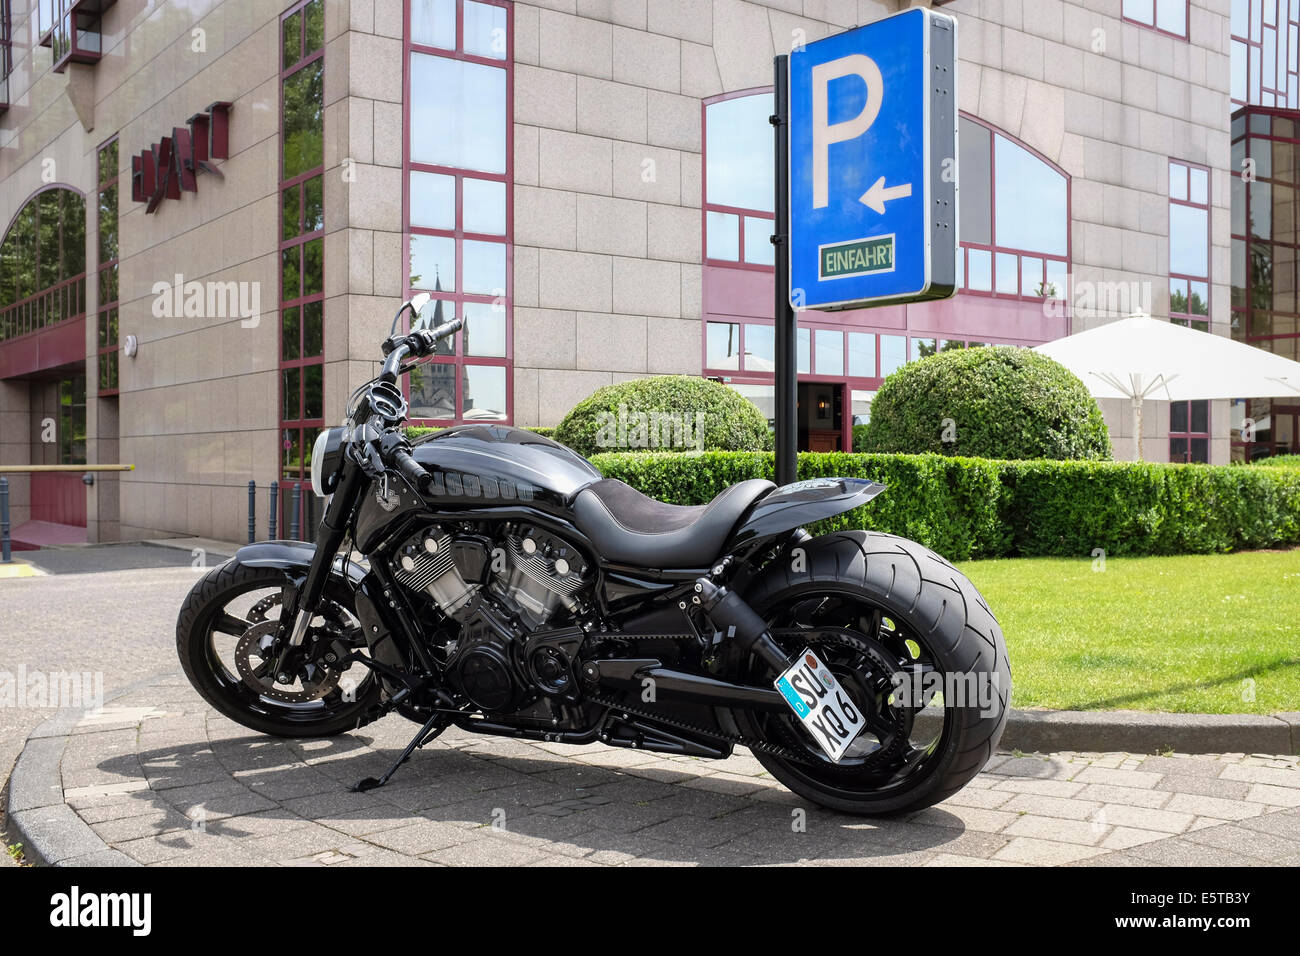 Harley Davidson V Rod Stockfotos Und Bilder Kaufen Alamy